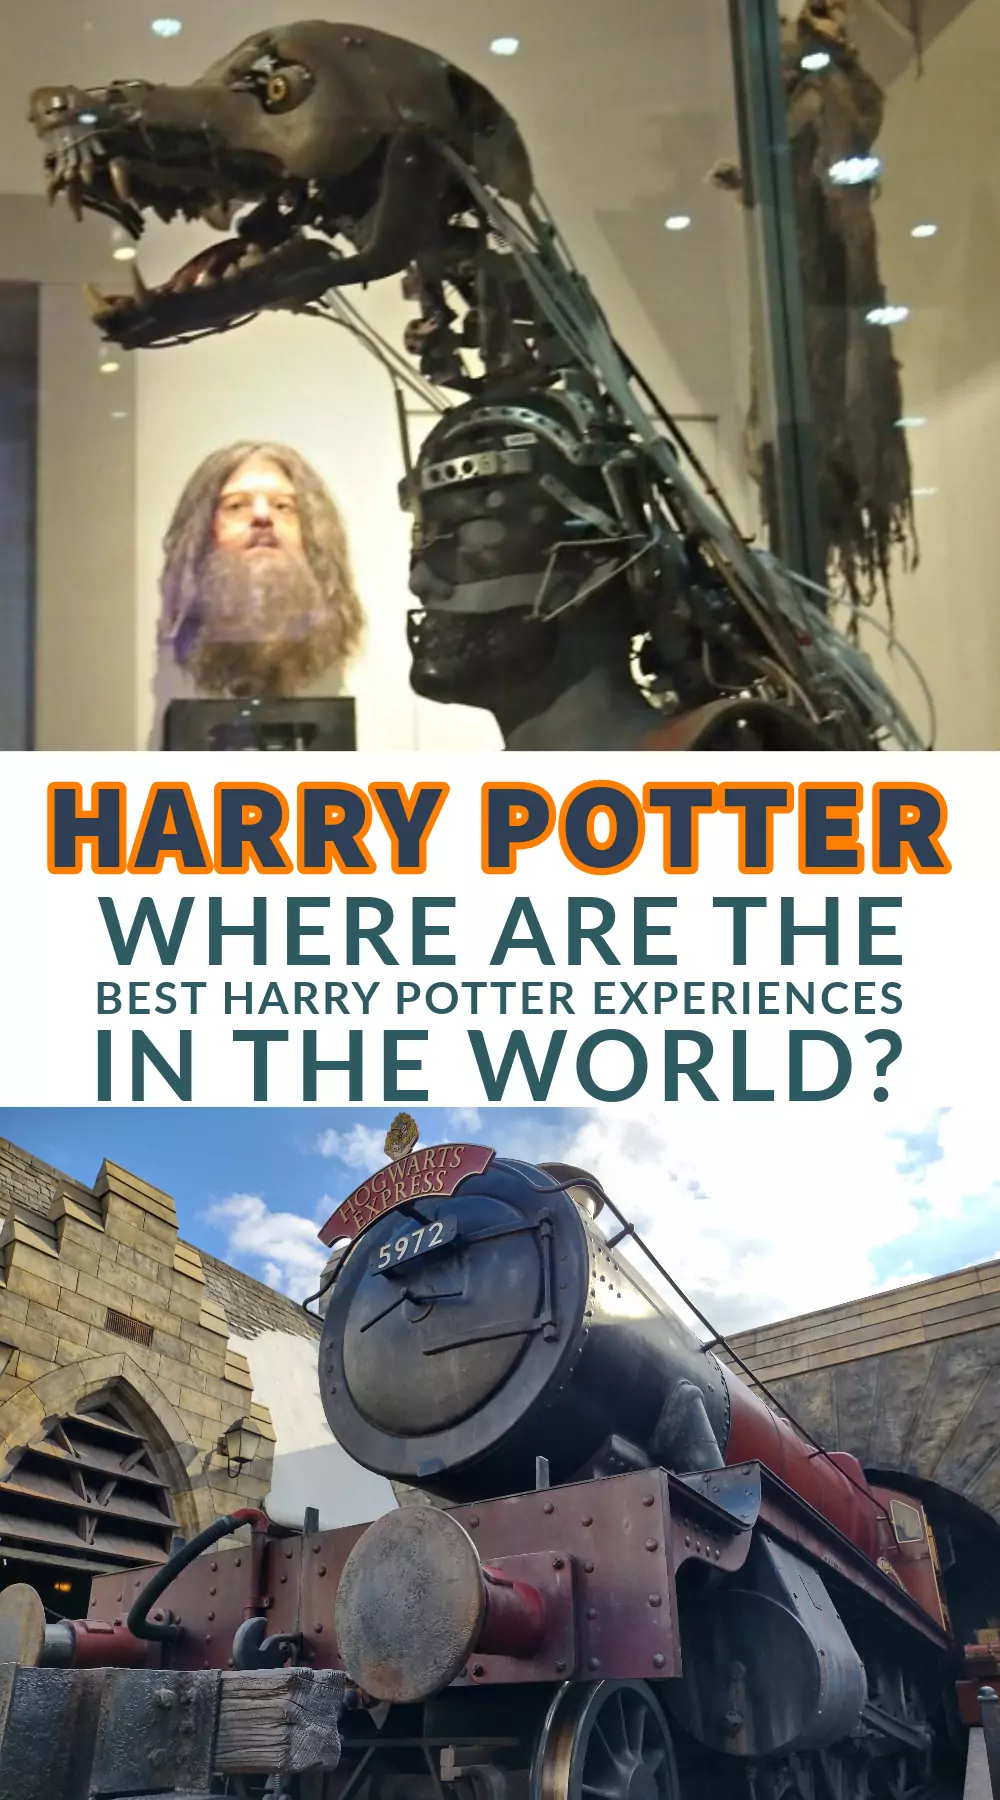 Best Harry Potter Experiences in the world Pintereset photos animatronic werewold hogwarts express